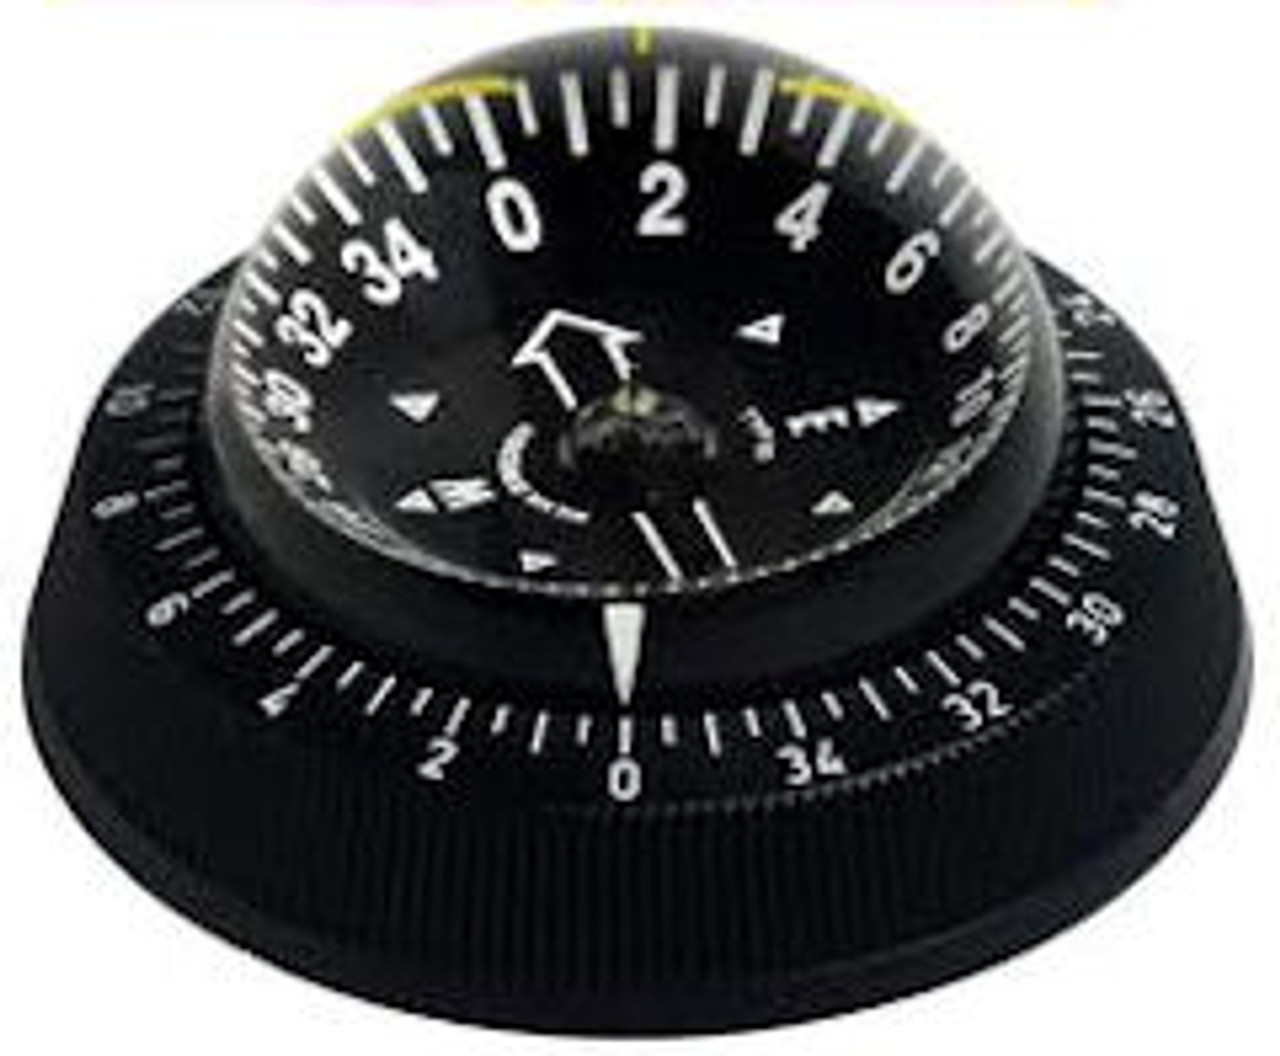 Silva 70p Compass Compasses Gps